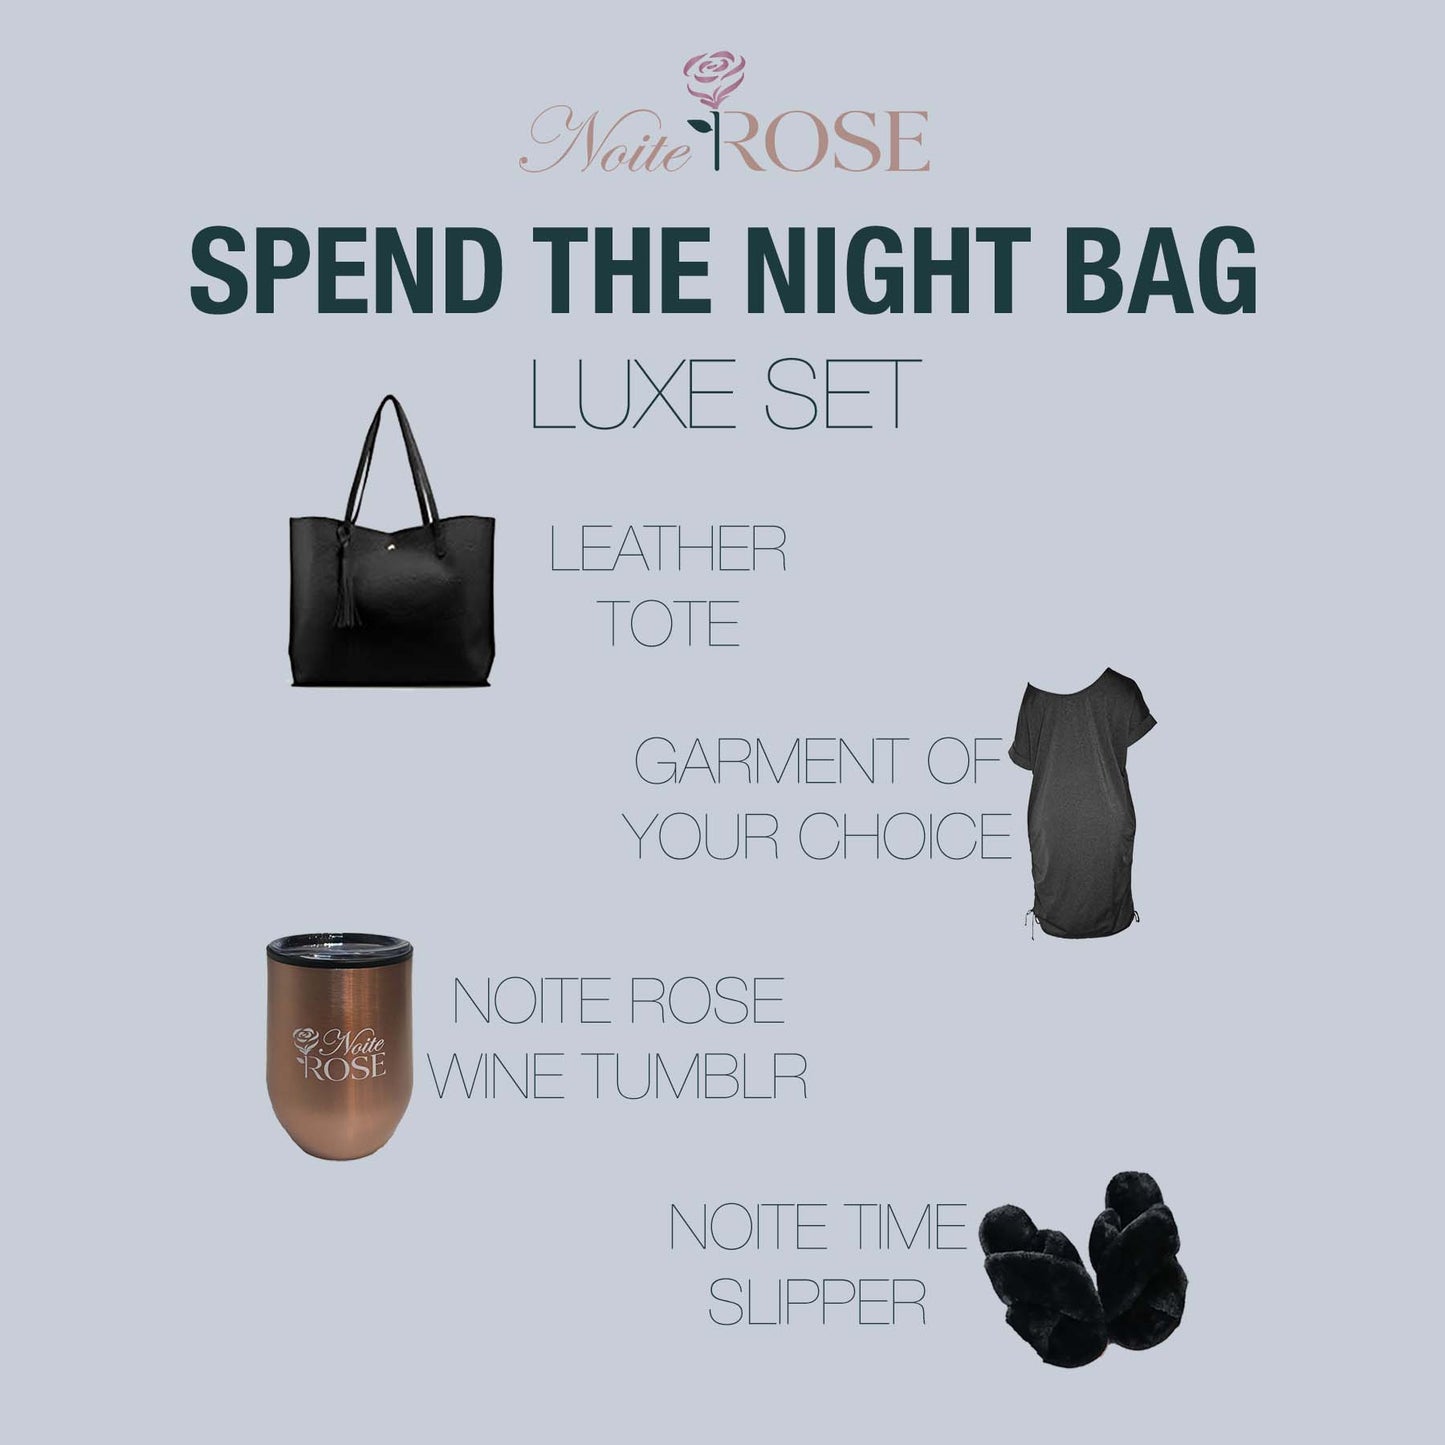 spend the night bag ideas